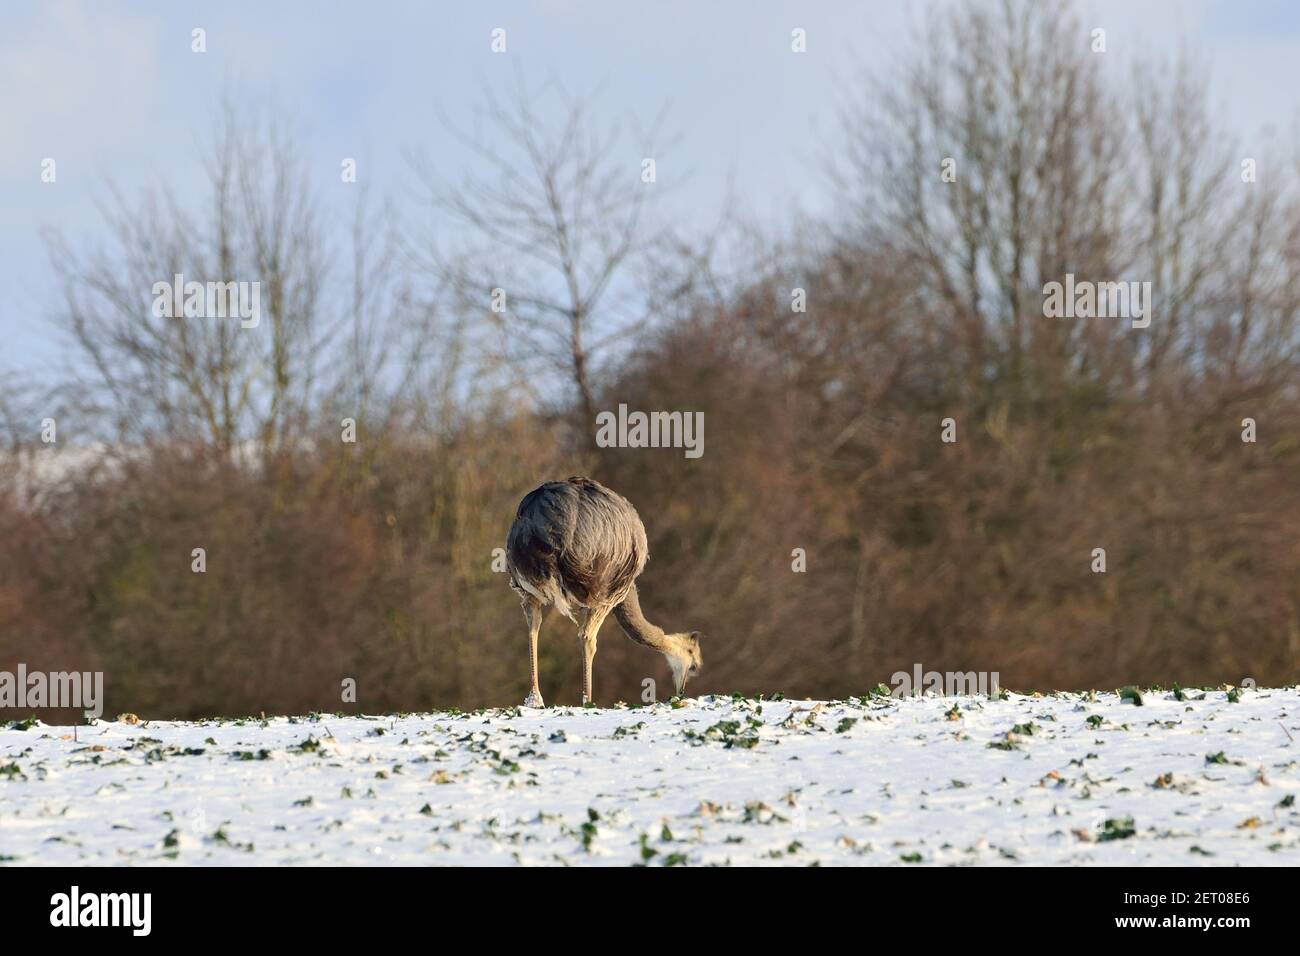 Rhea near Utecht, Northwestern Mecklenburg, Germany, Nandus im Schnee Stock Photo